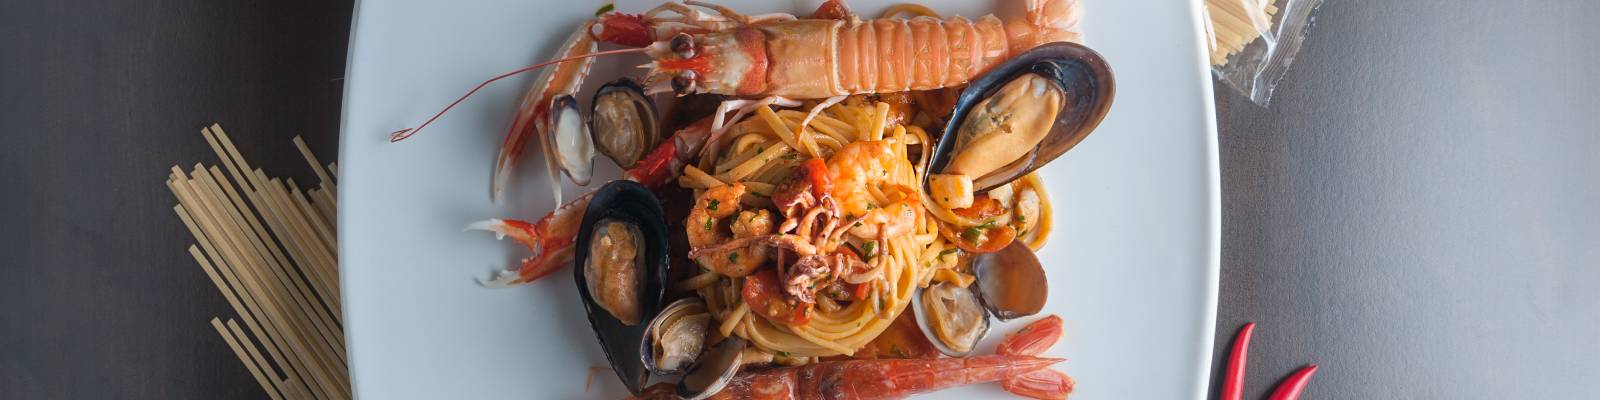 Pasta Garofalo - Linguine with seafood